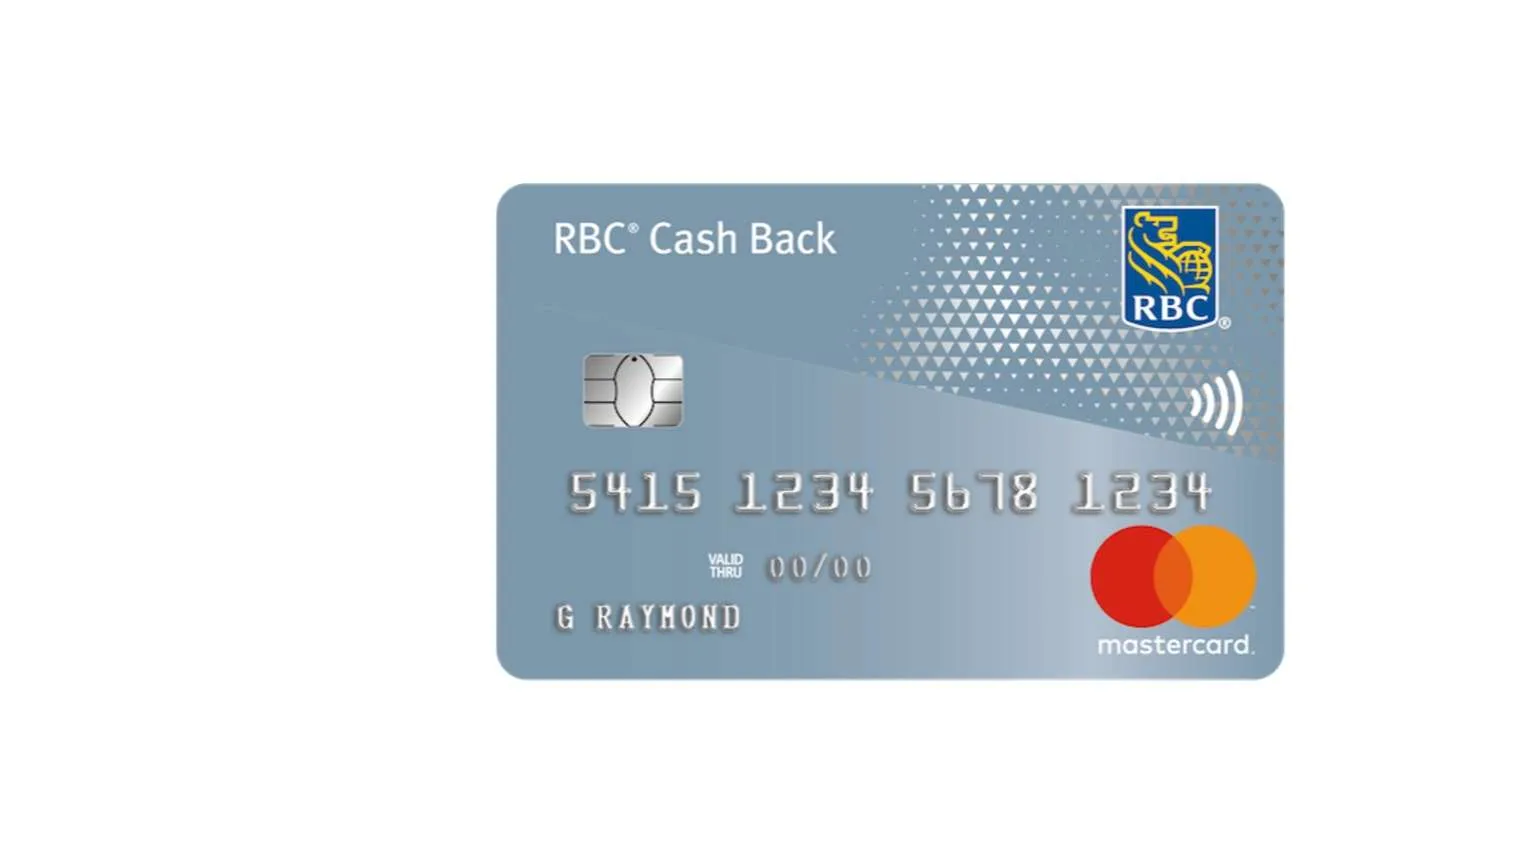 rbc cash back mastercard travel insurance